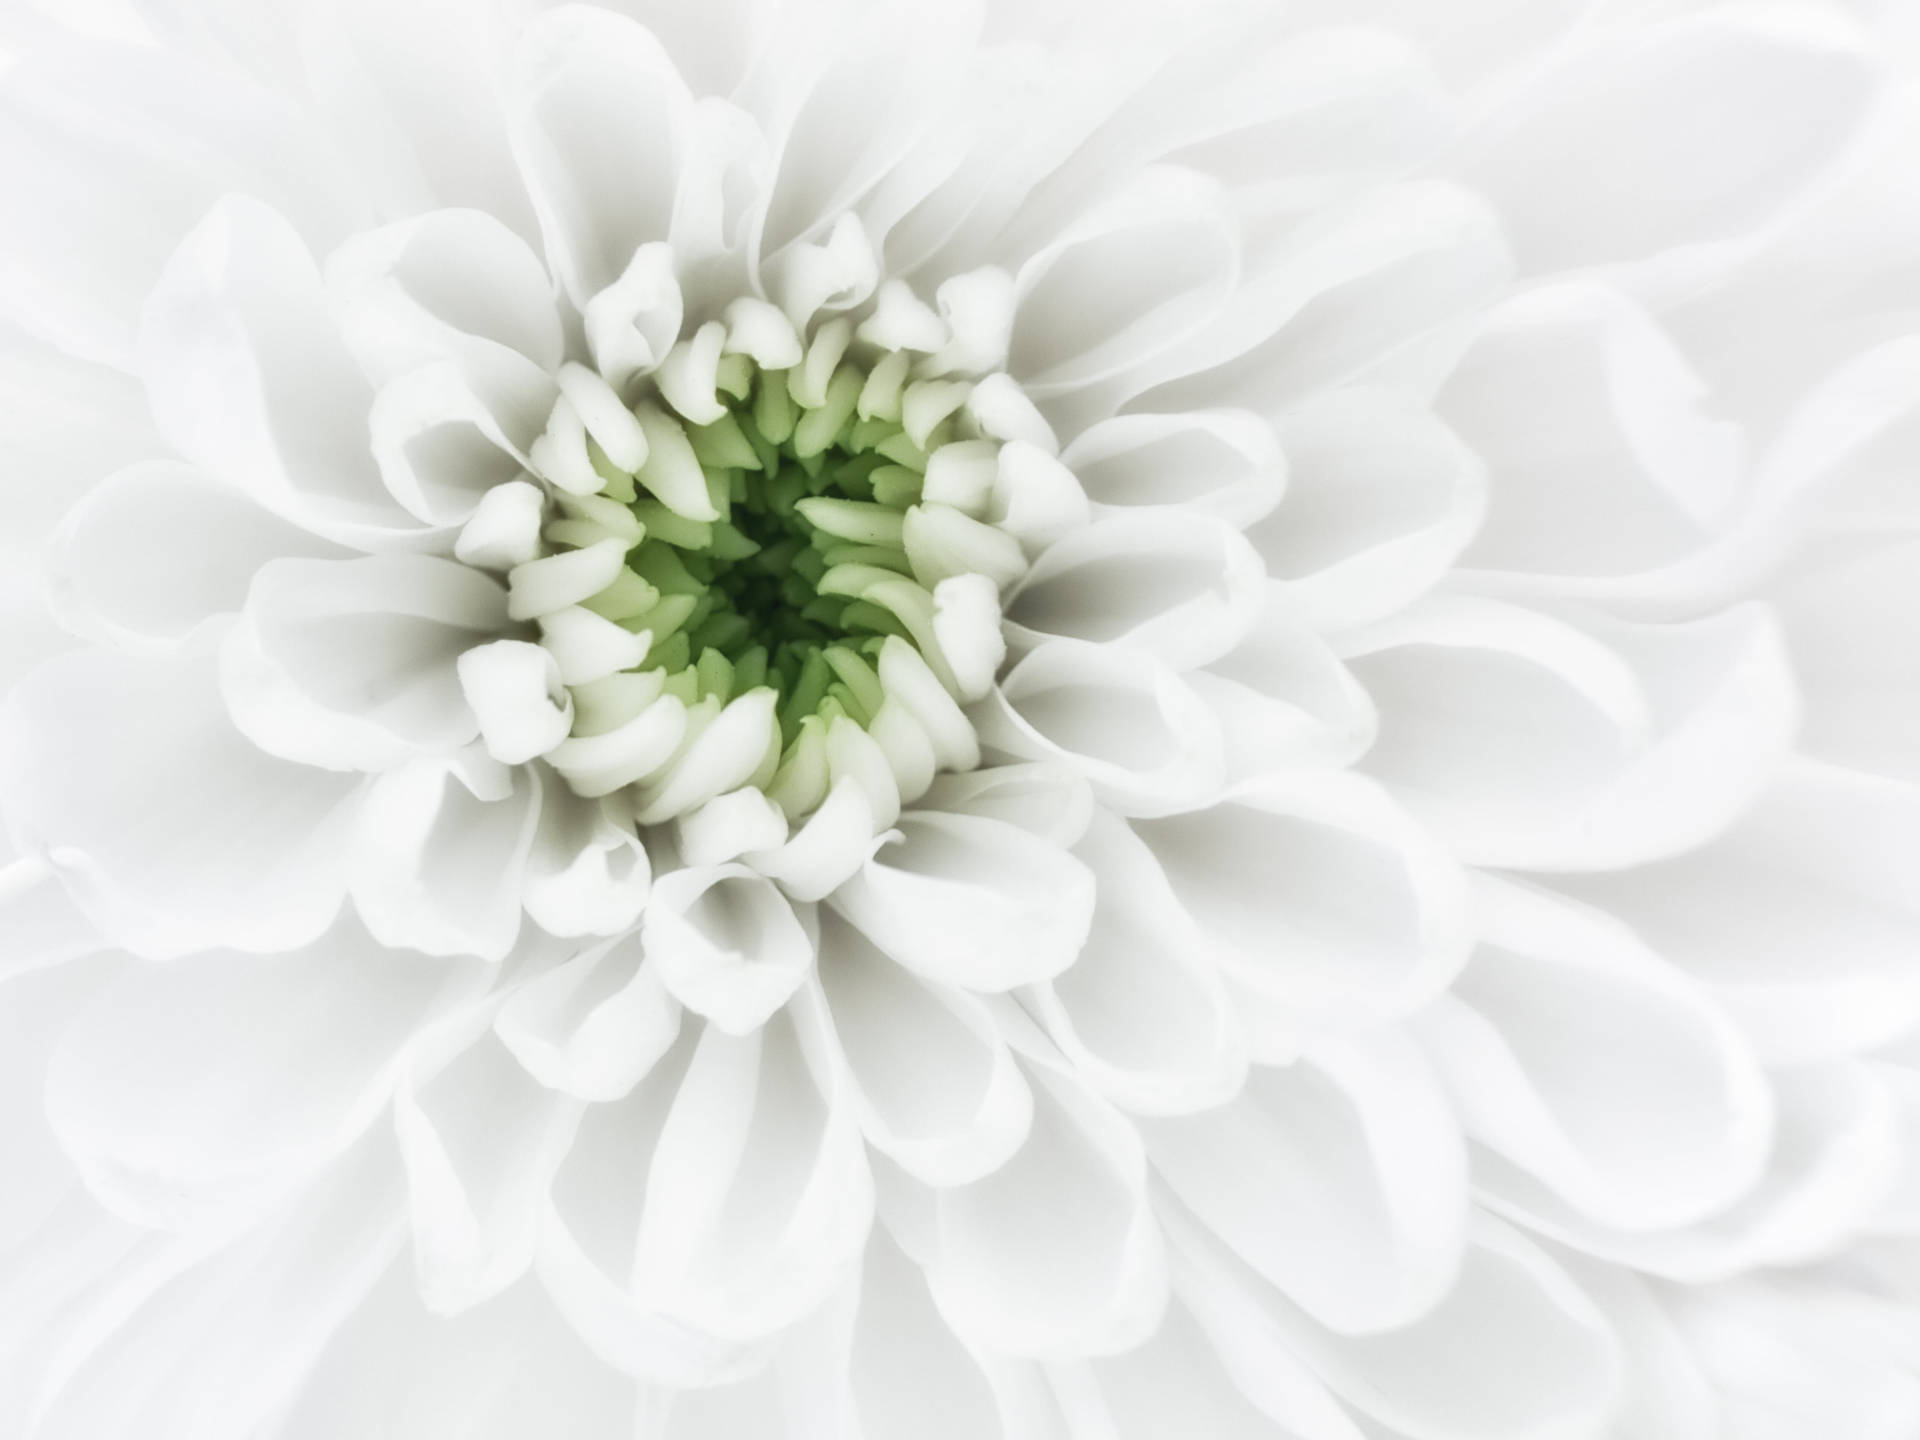 Chrysanthemum White Petals Background